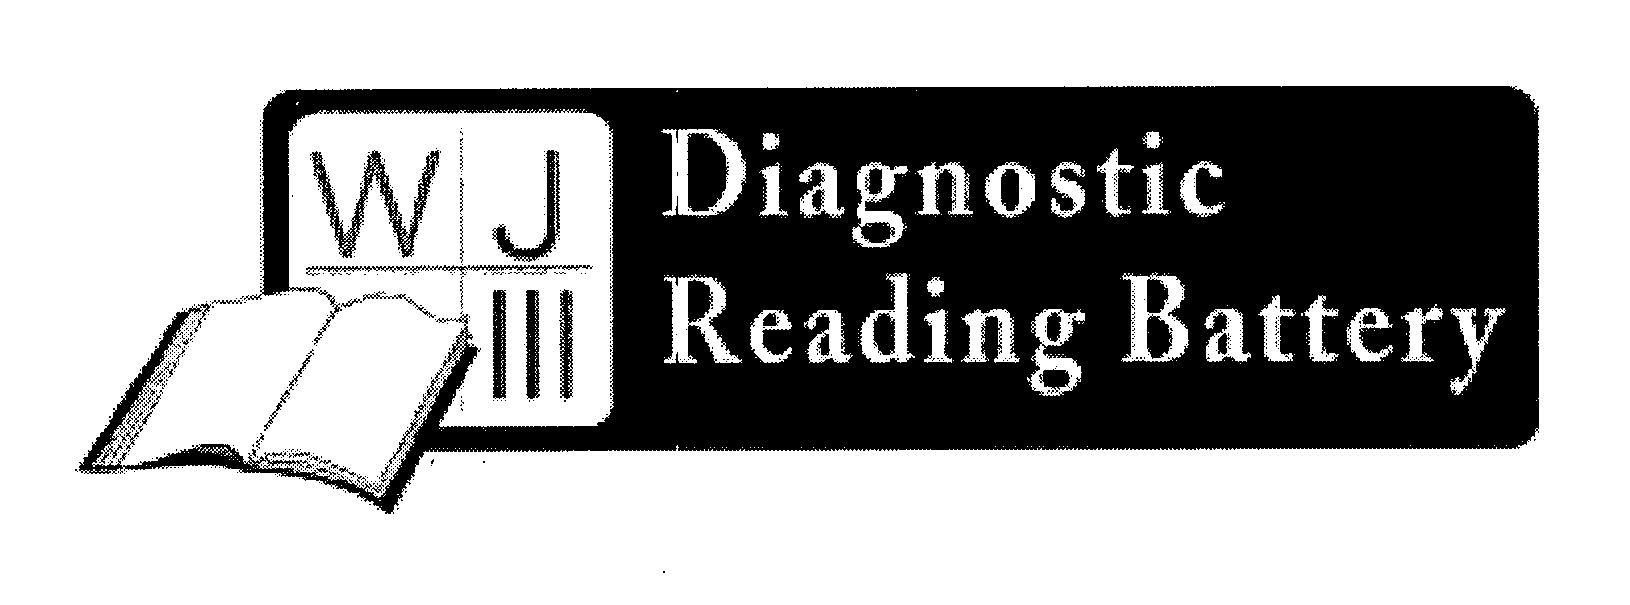  WJ III DIAGNOSTIC READING BATTERY